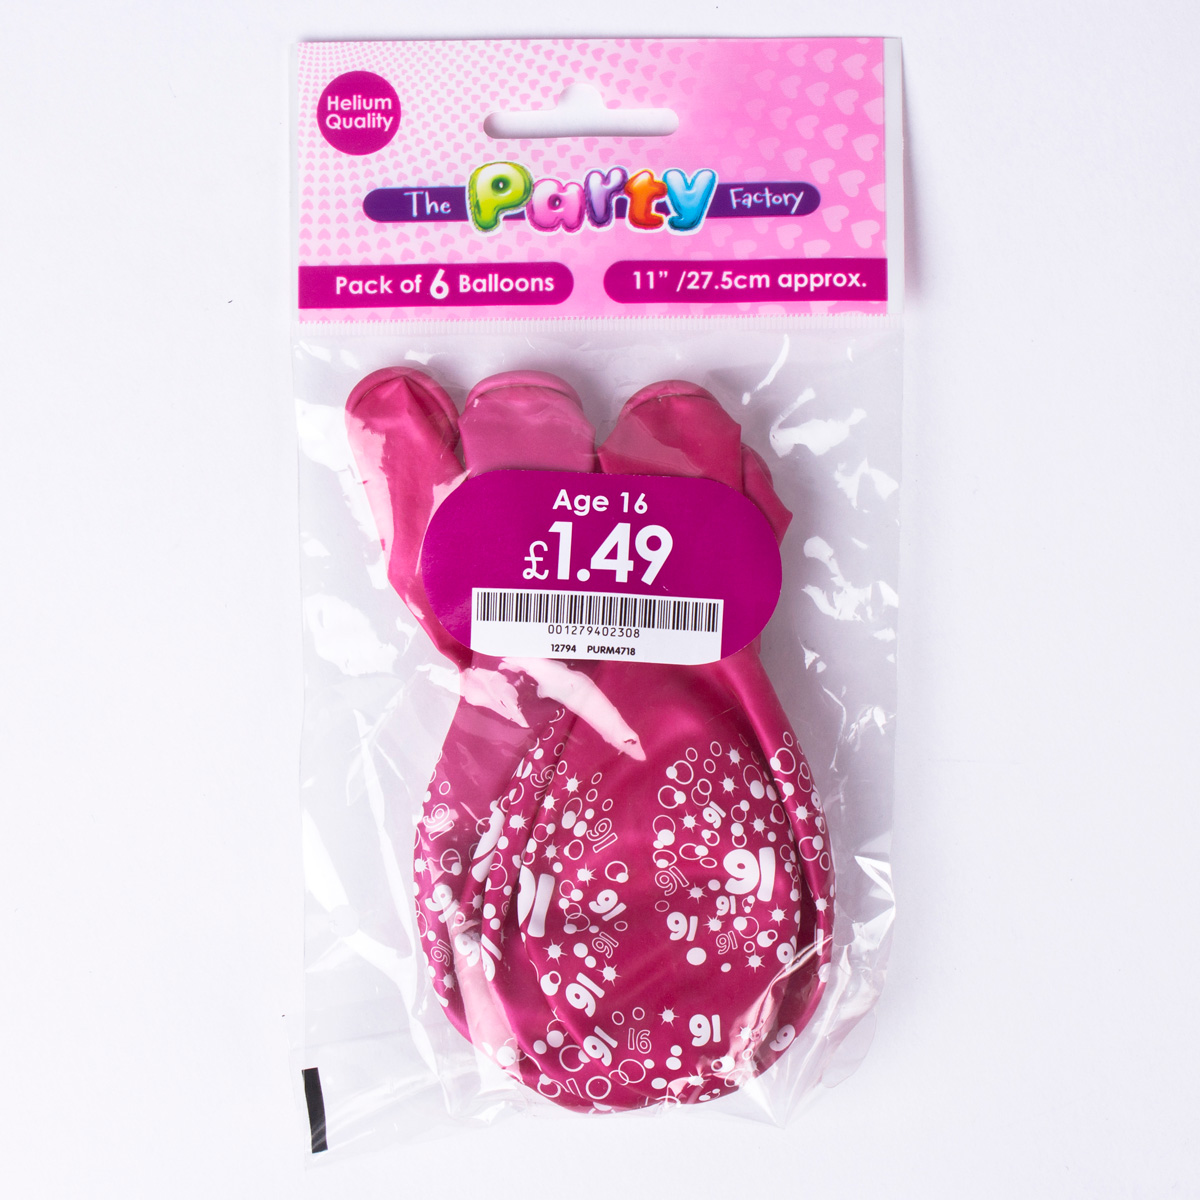 Metallic Pink Circles 16th Birthday Balloons - Pack Of 6